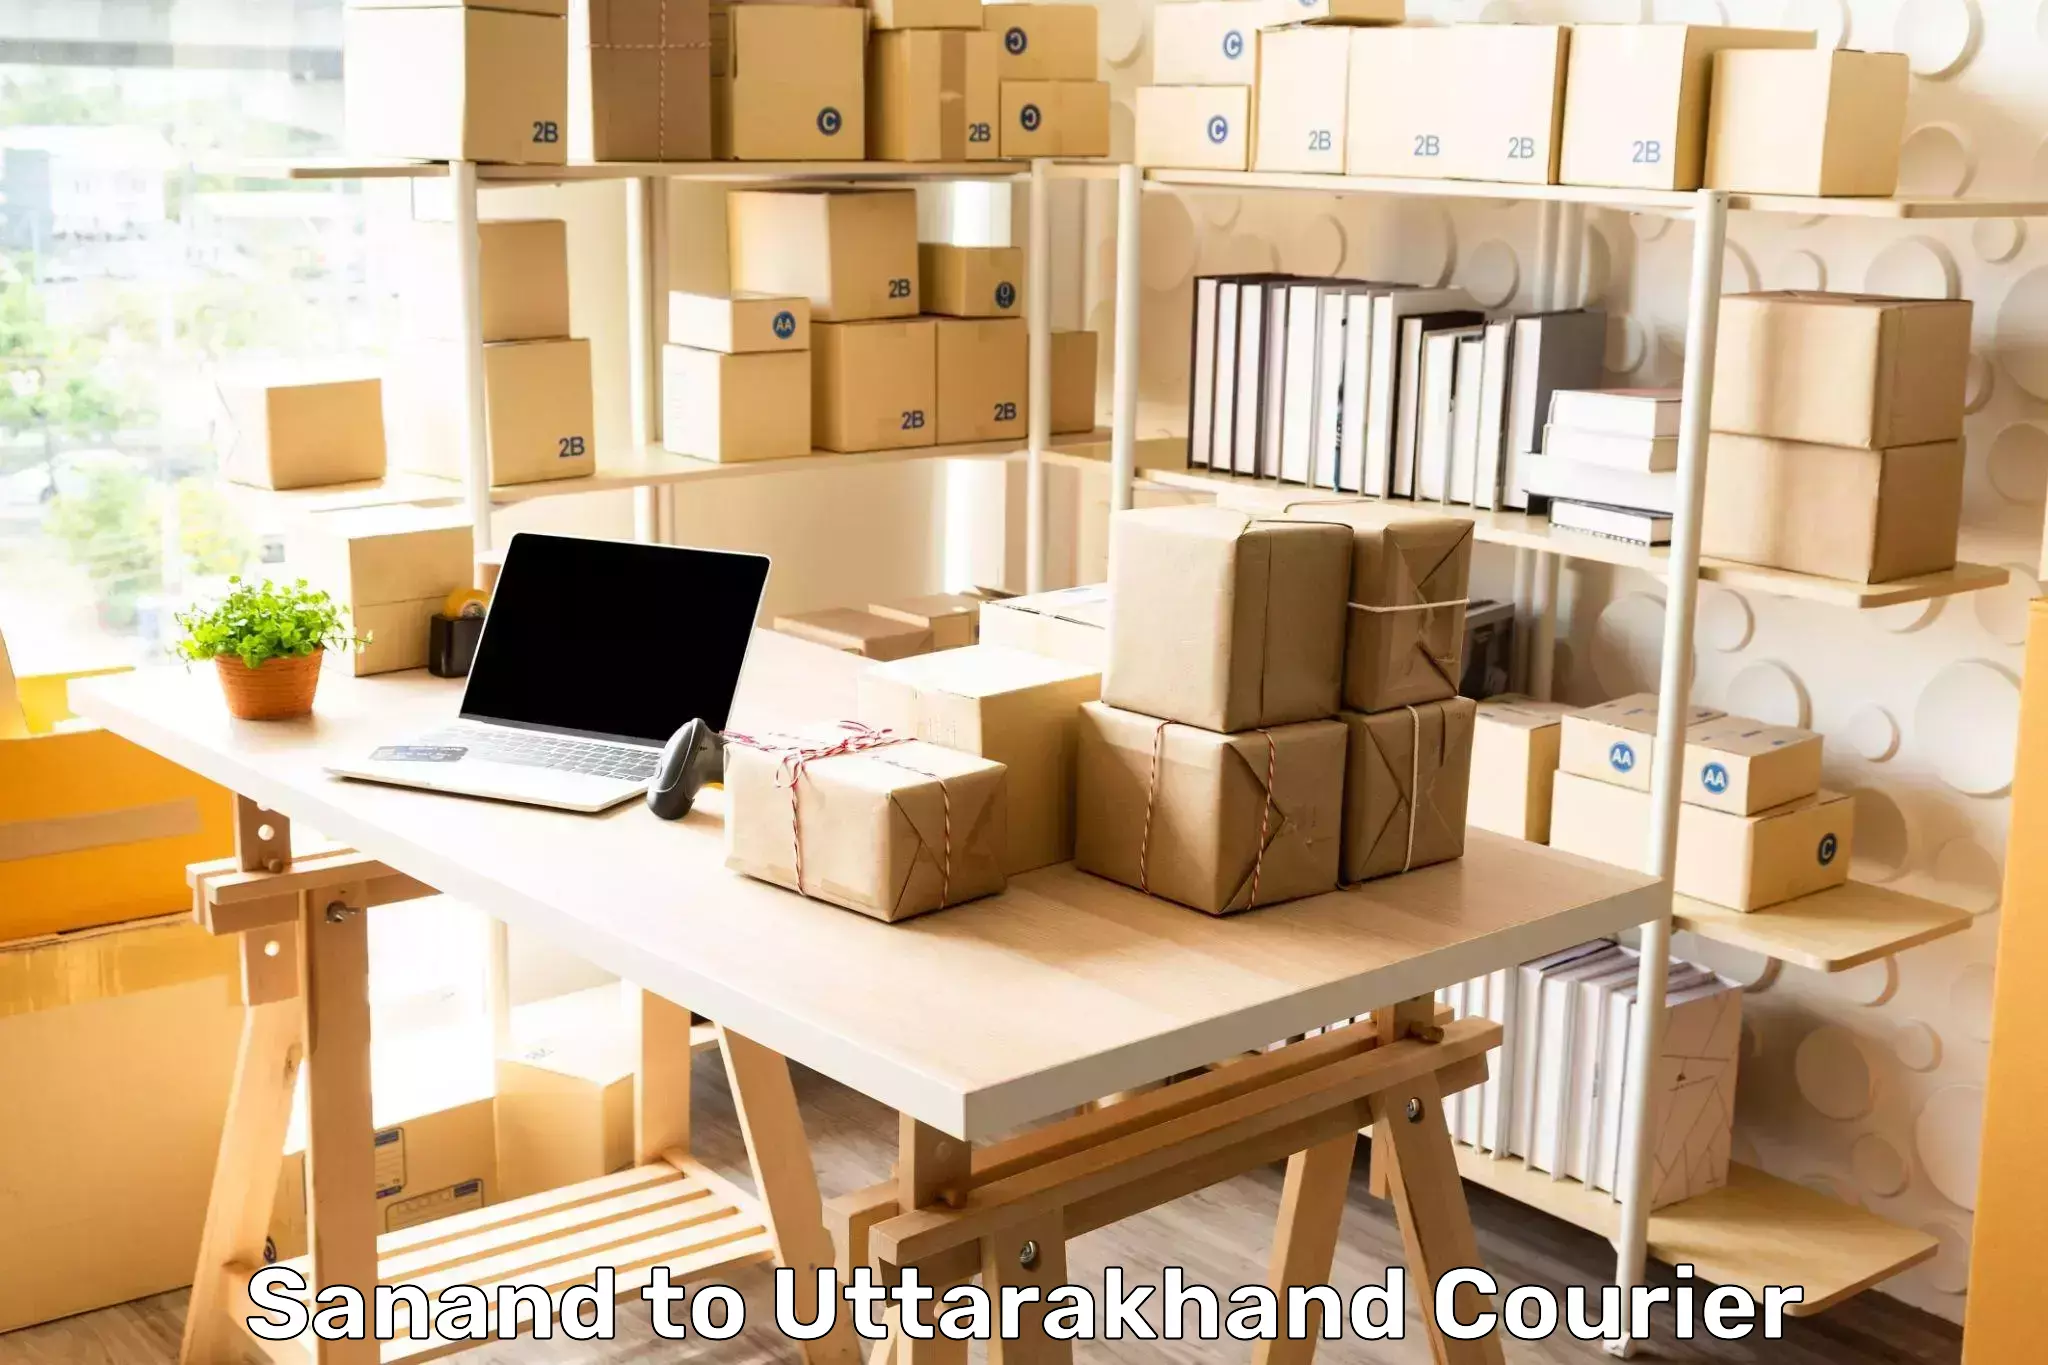 Digital courier platforms Sanand to Uttarakhand